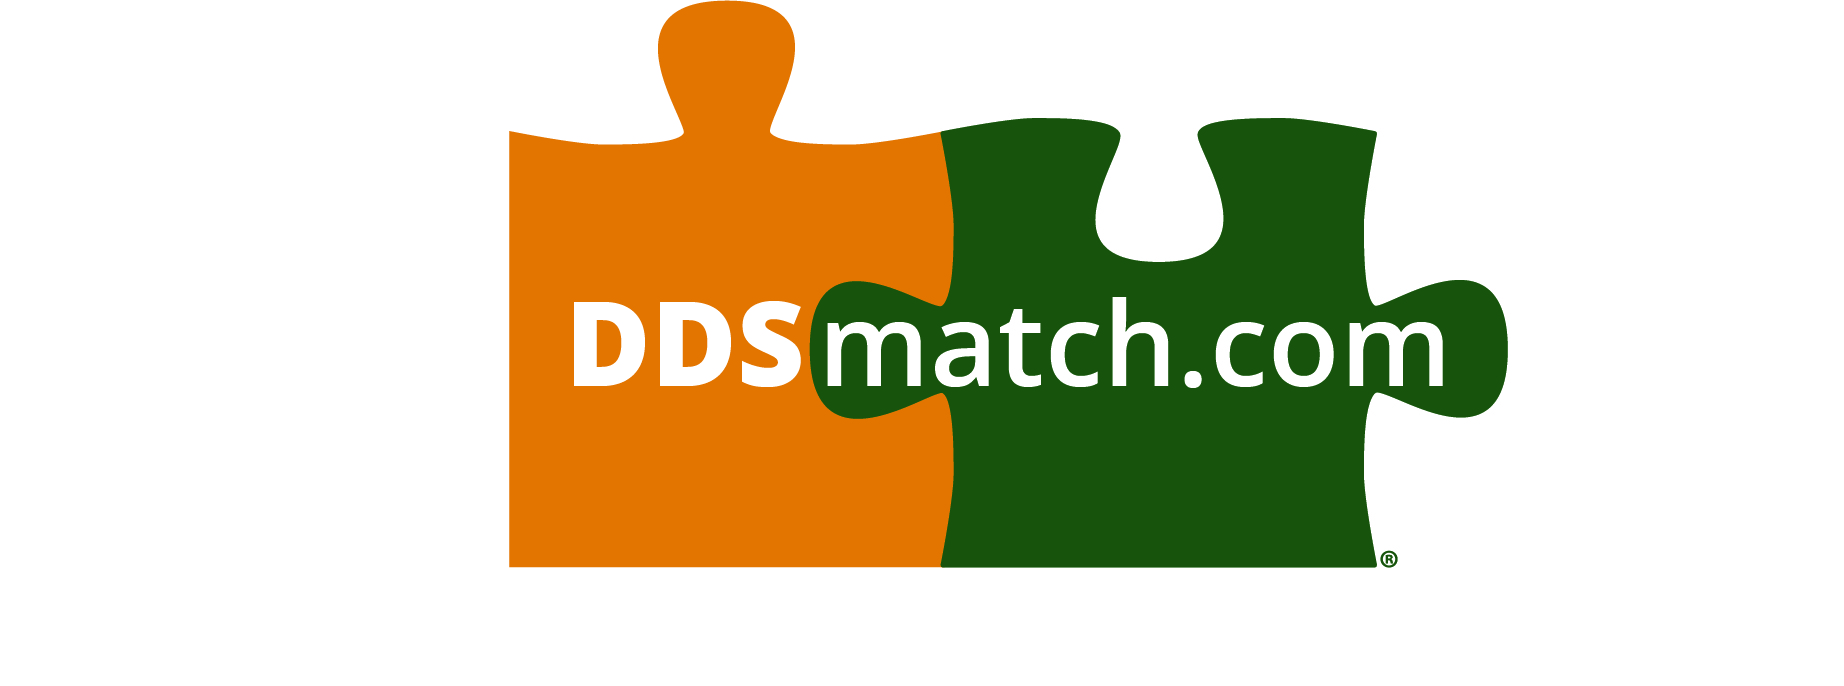 ddsmatch.com - Ed Ferrero Logo